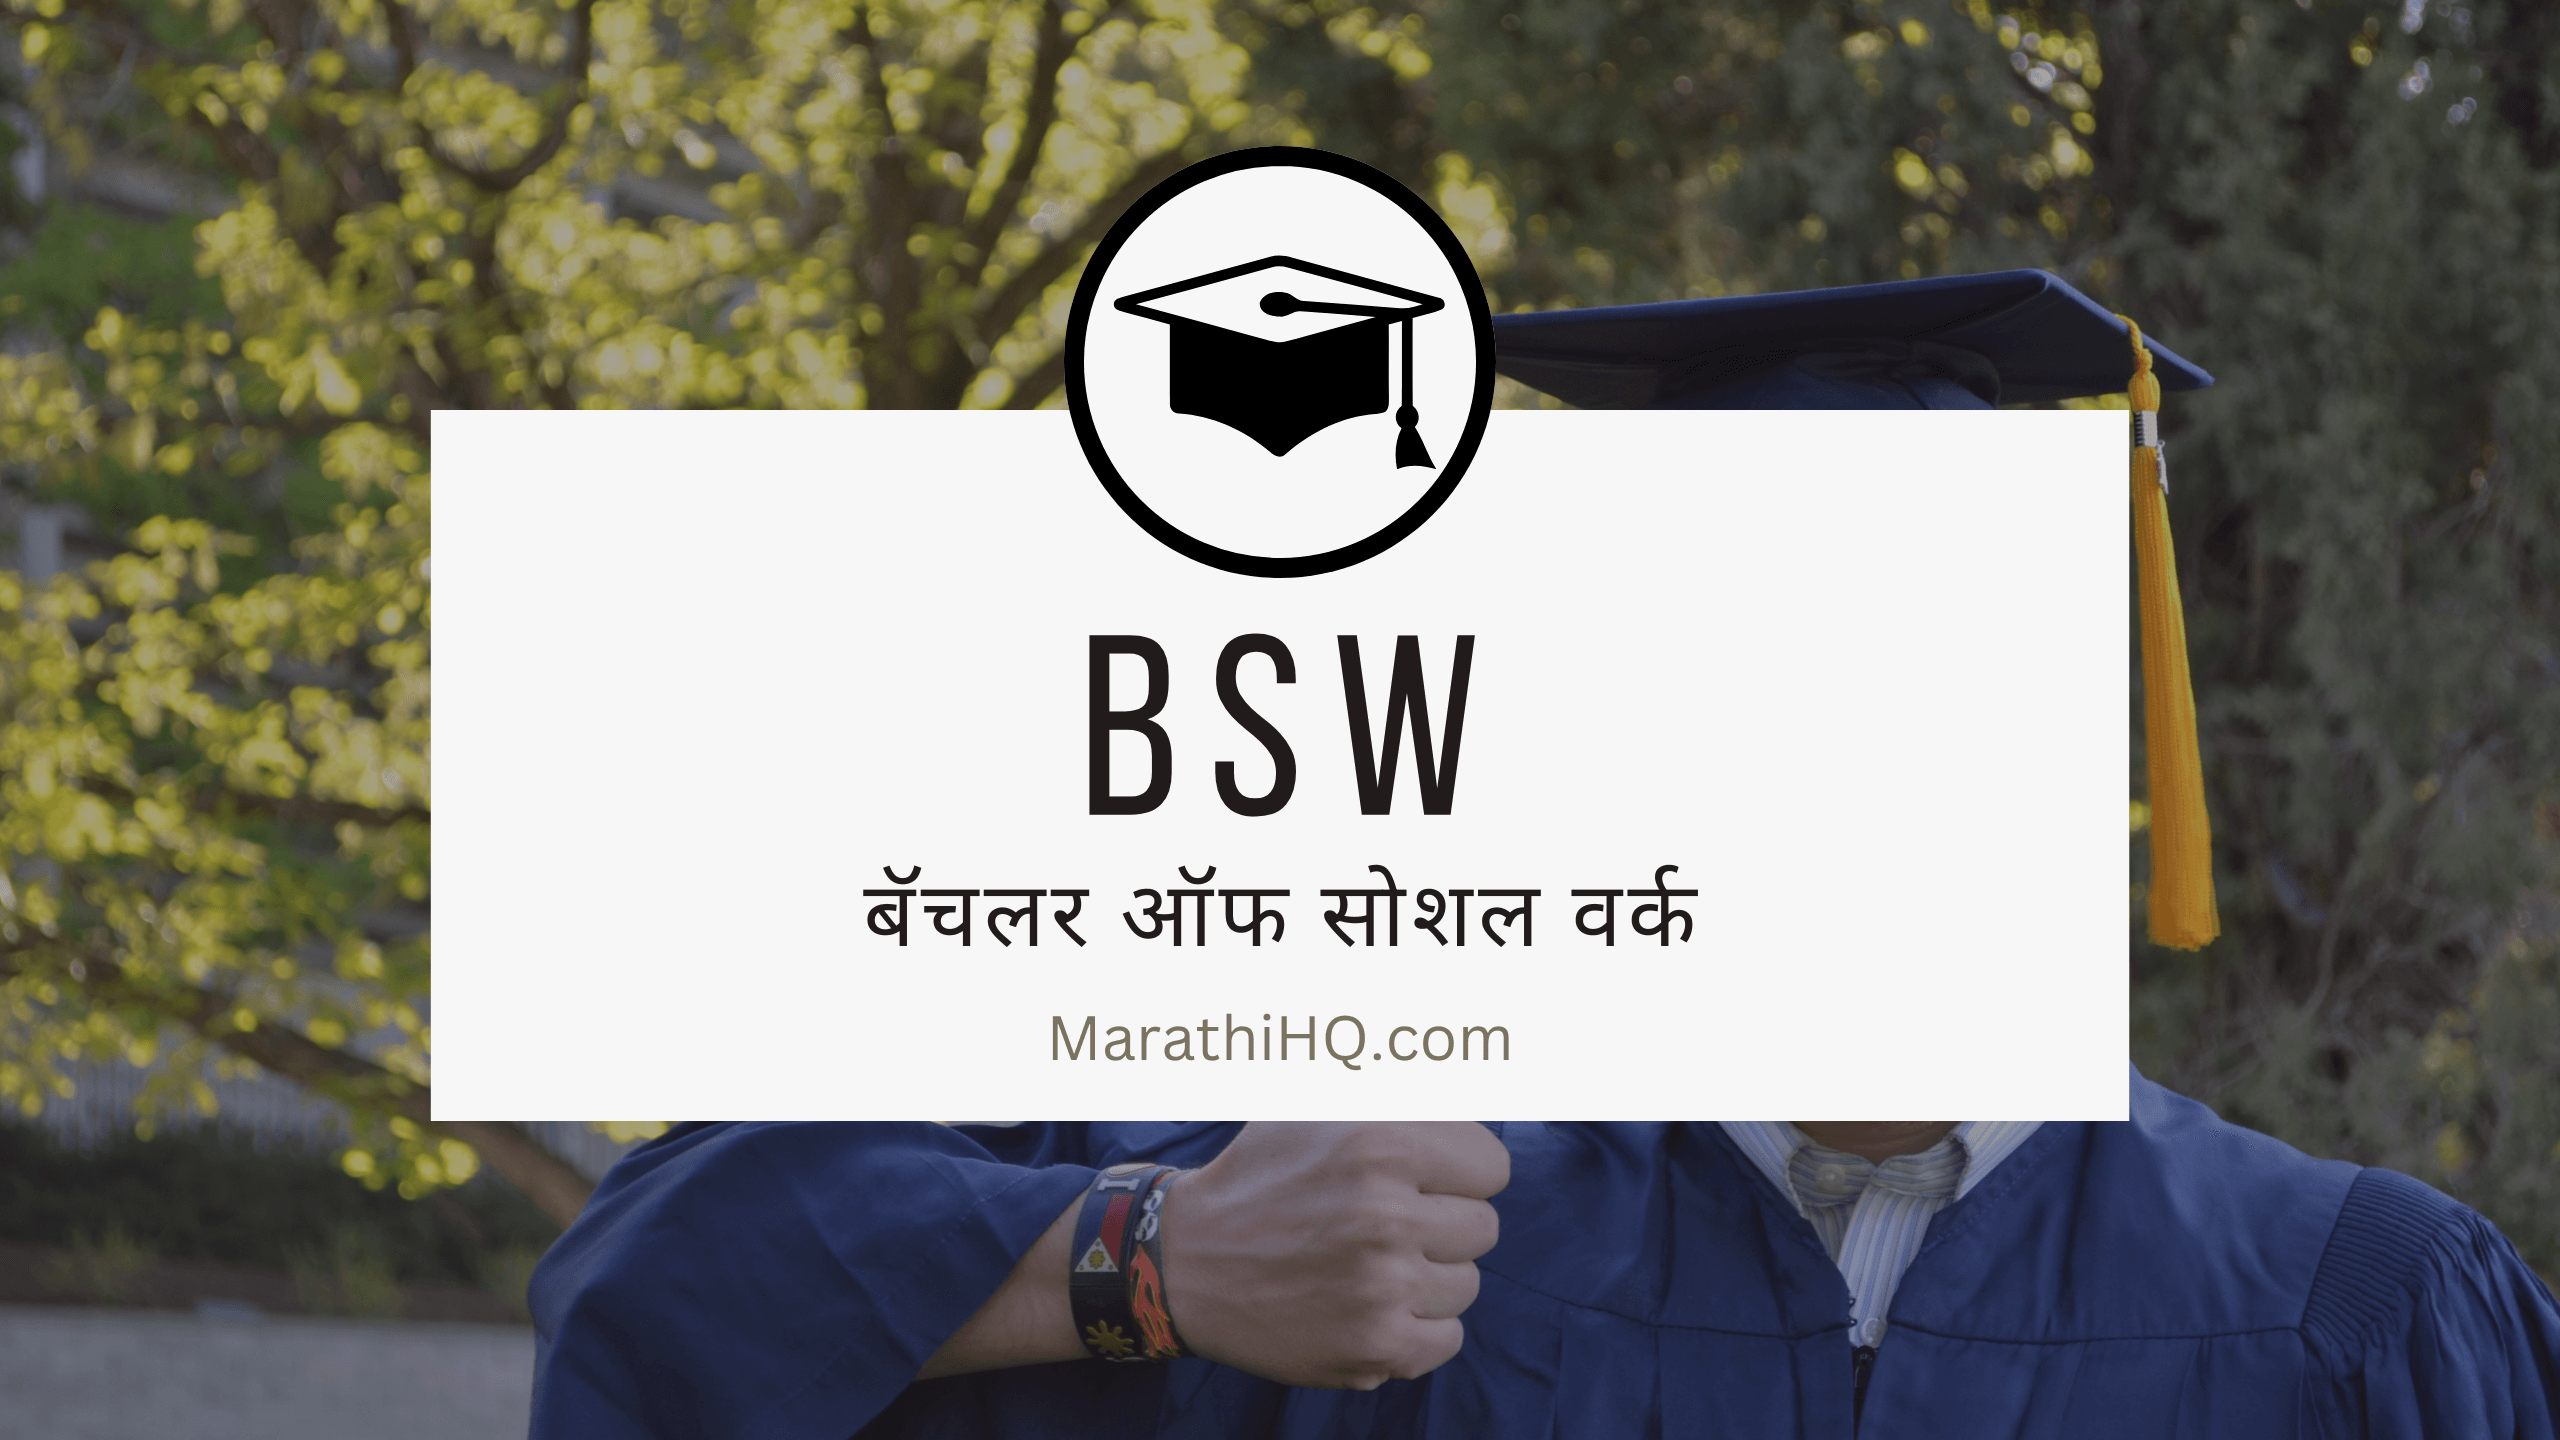 BSW कोर्स माहिती | BSW Course Information in Marathi